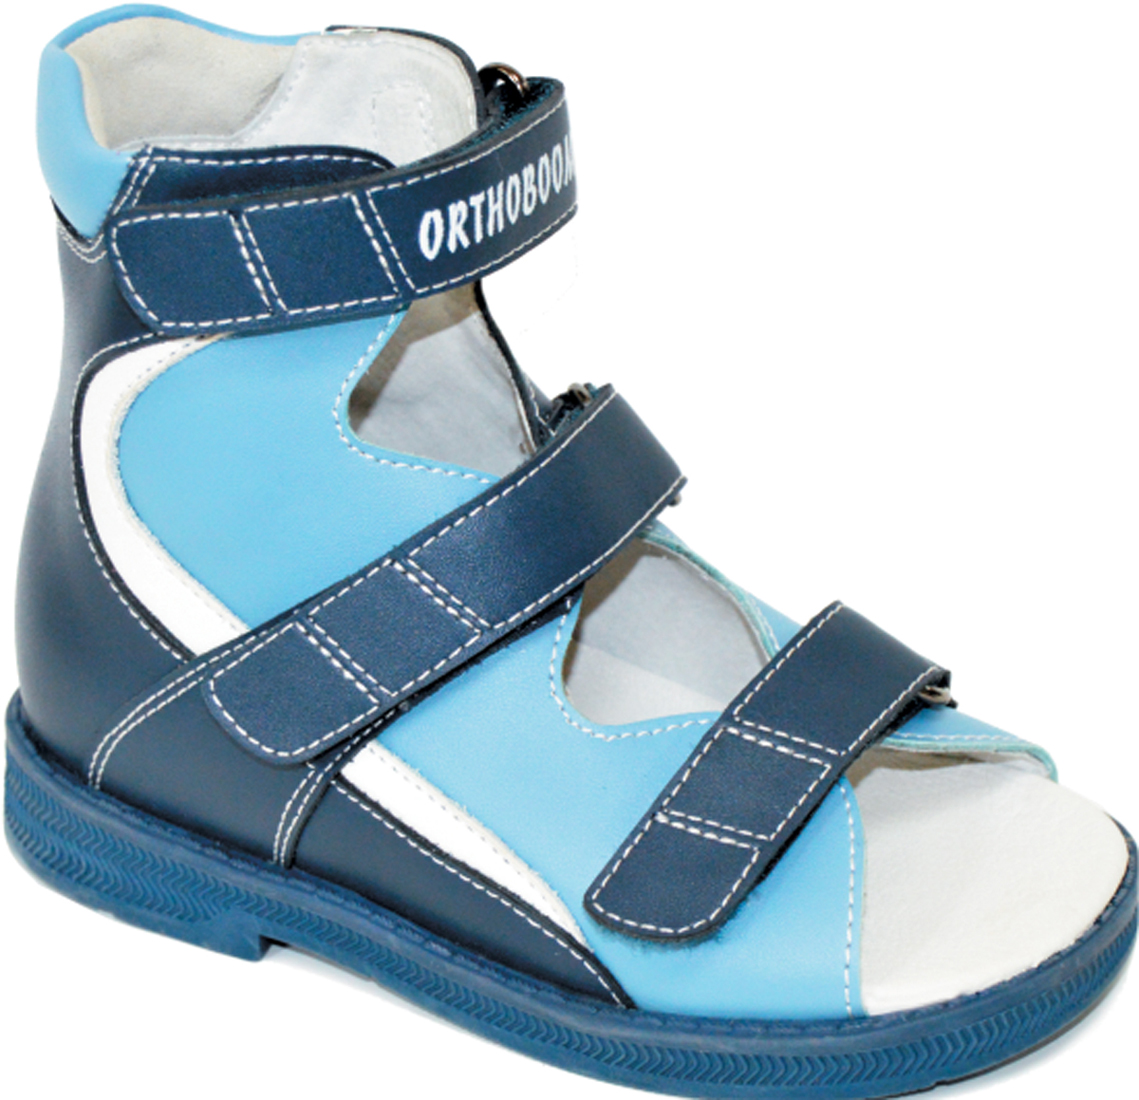 Сандалии для мальчика Orthoboom, цвет: темно-синий-голубой-белый. 71597-33. Размер 26